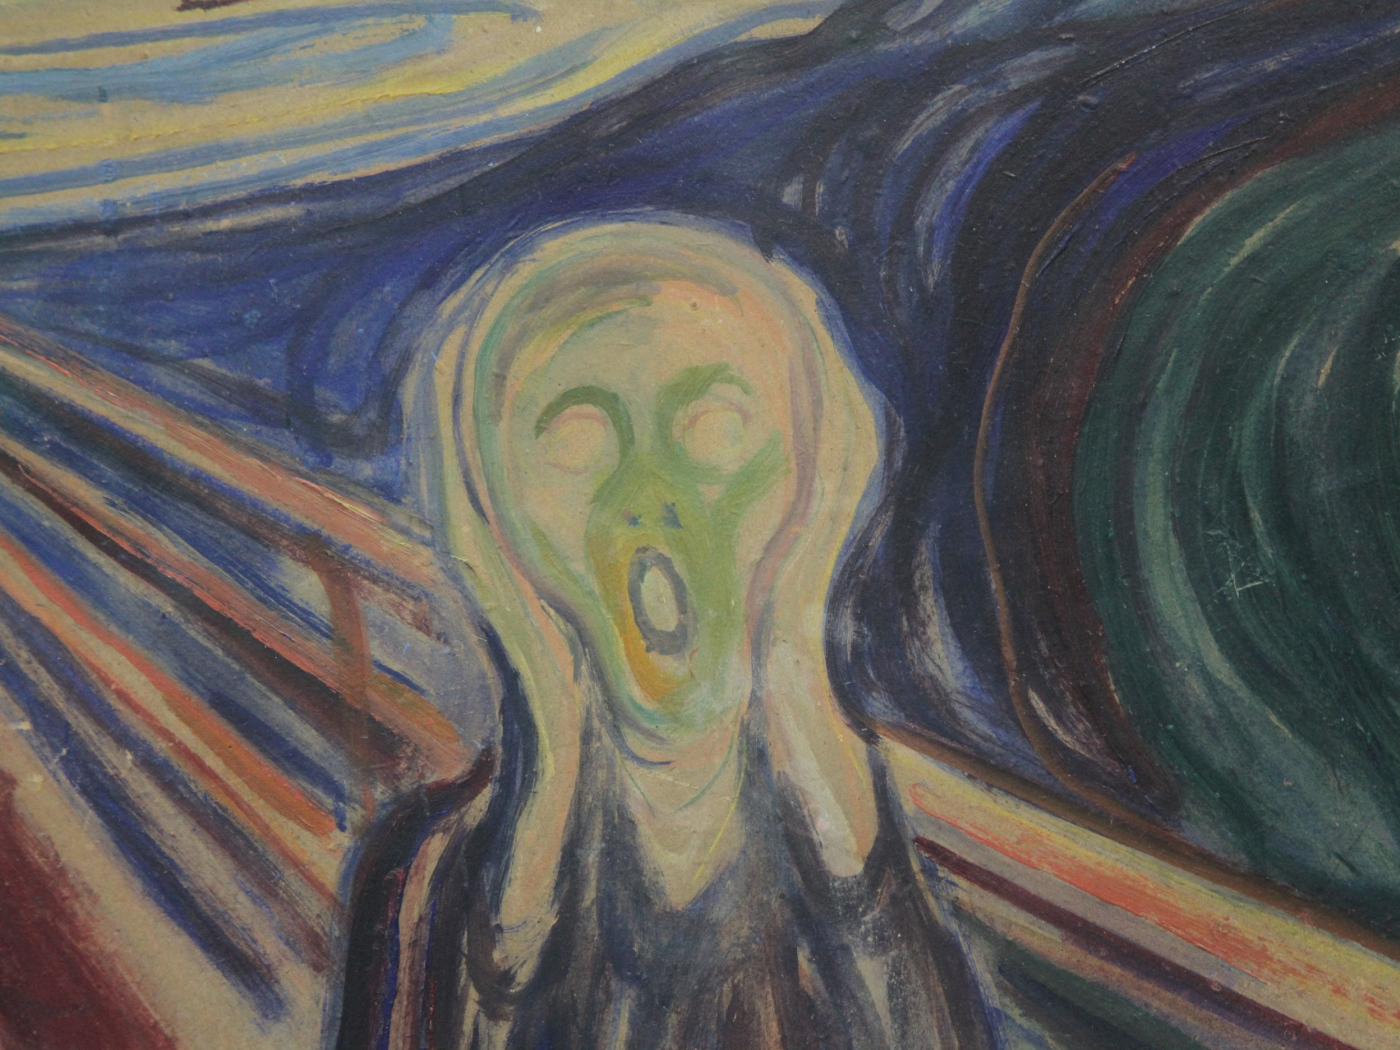 Painting Edvard Munch - Scream